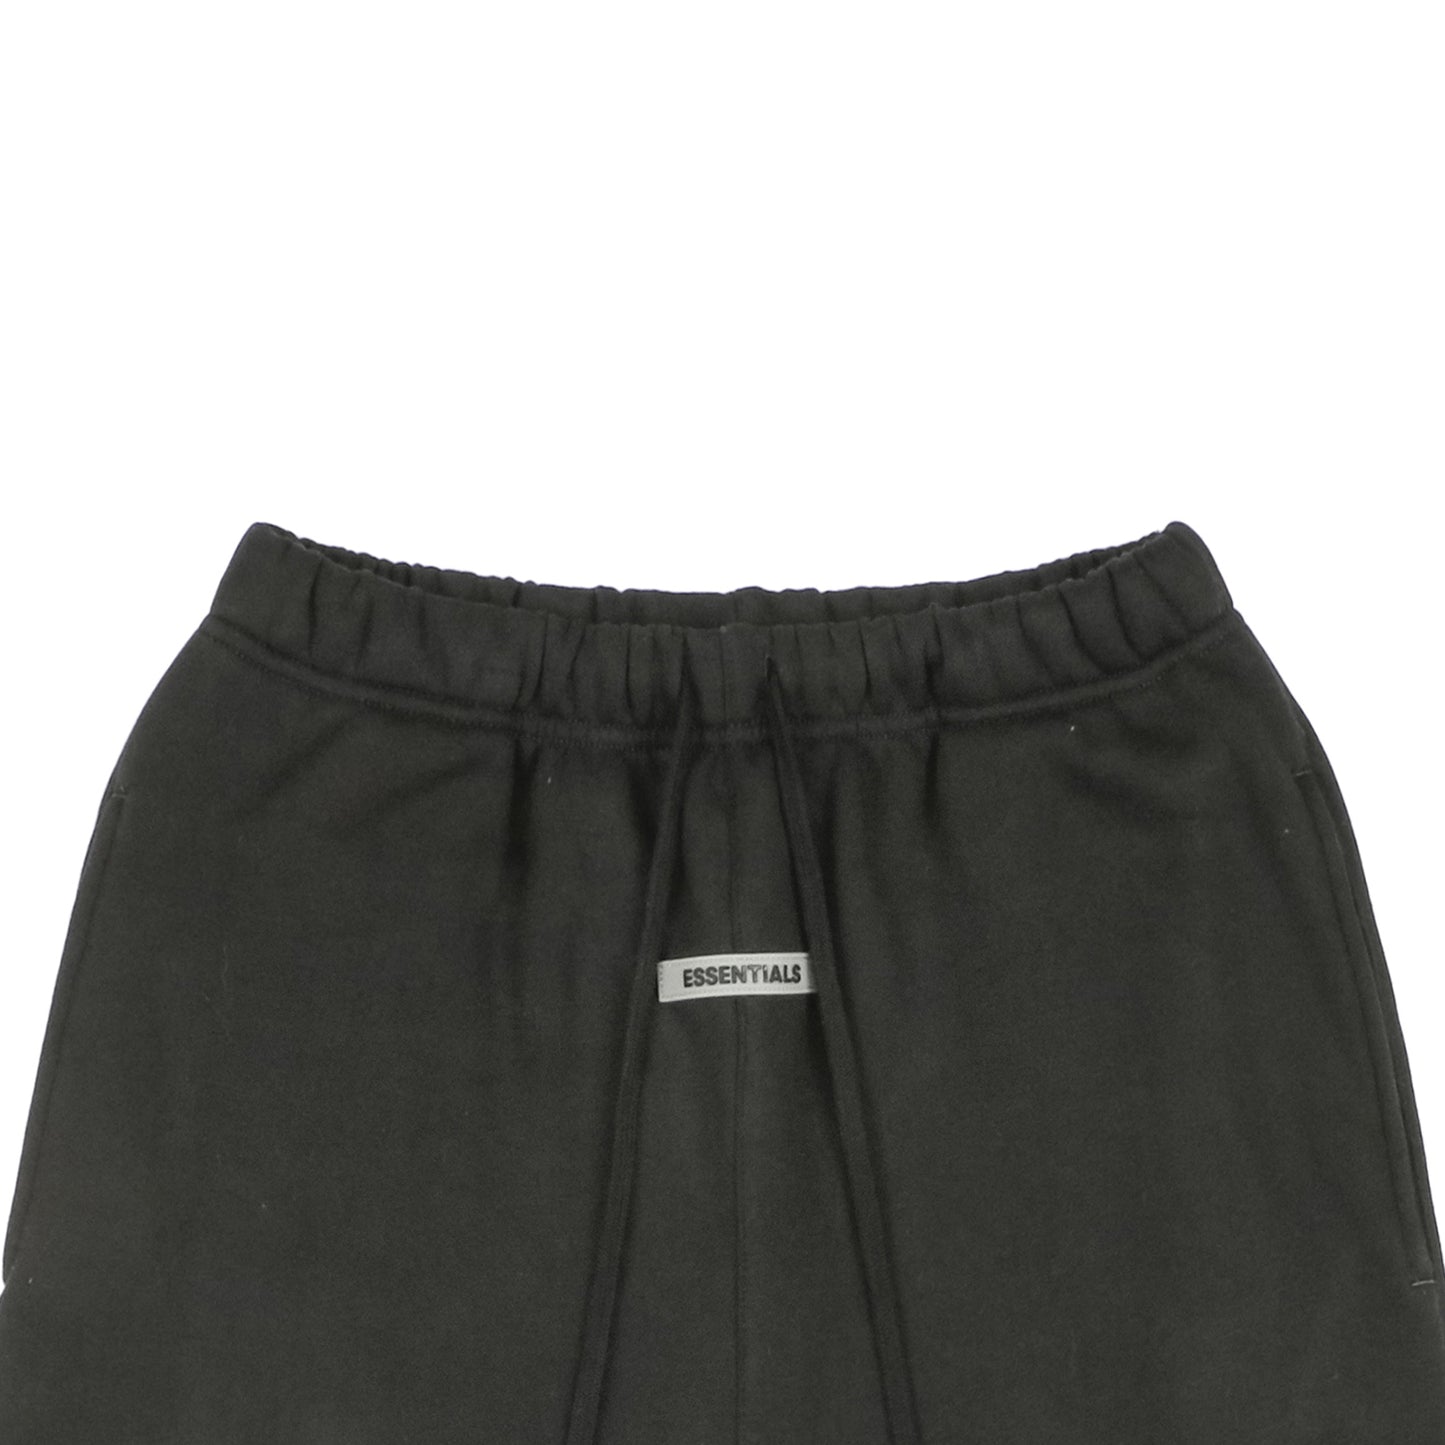 FOG Black E55ential5 Shorts